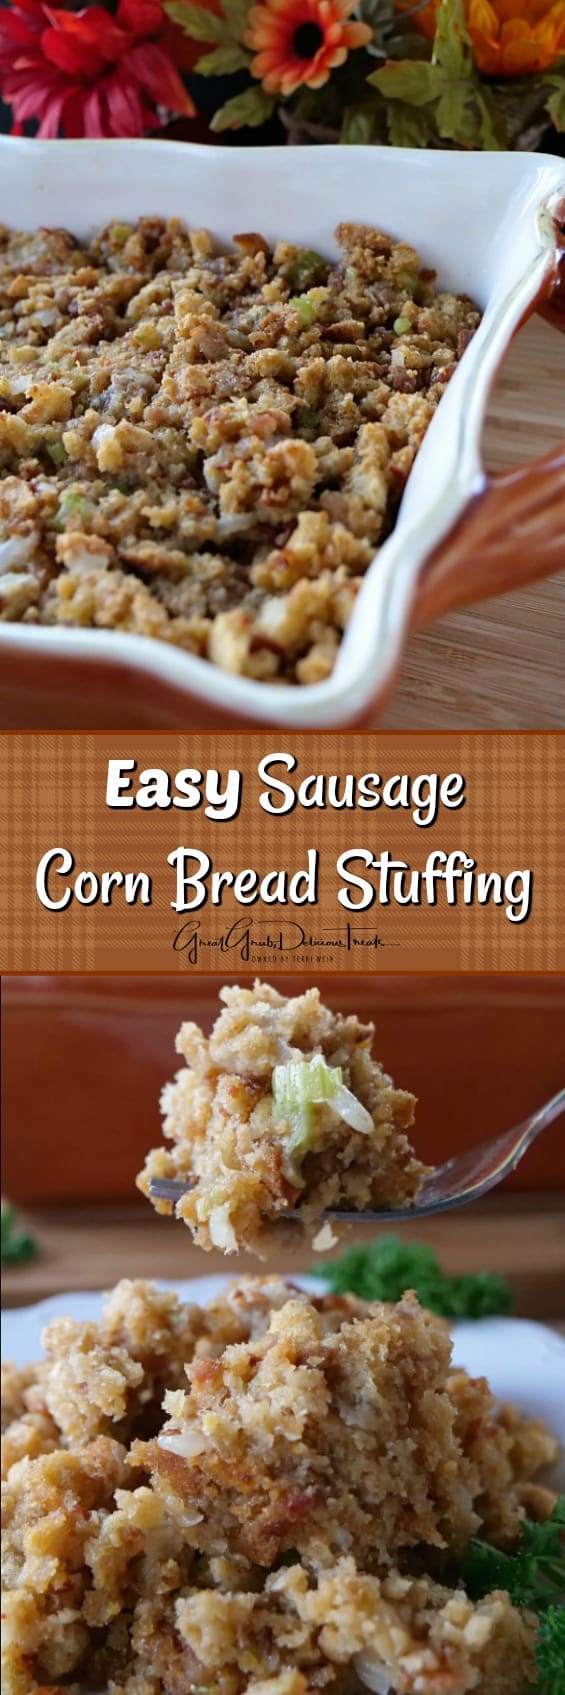 Easy Sausage Corn Bread Stuffing